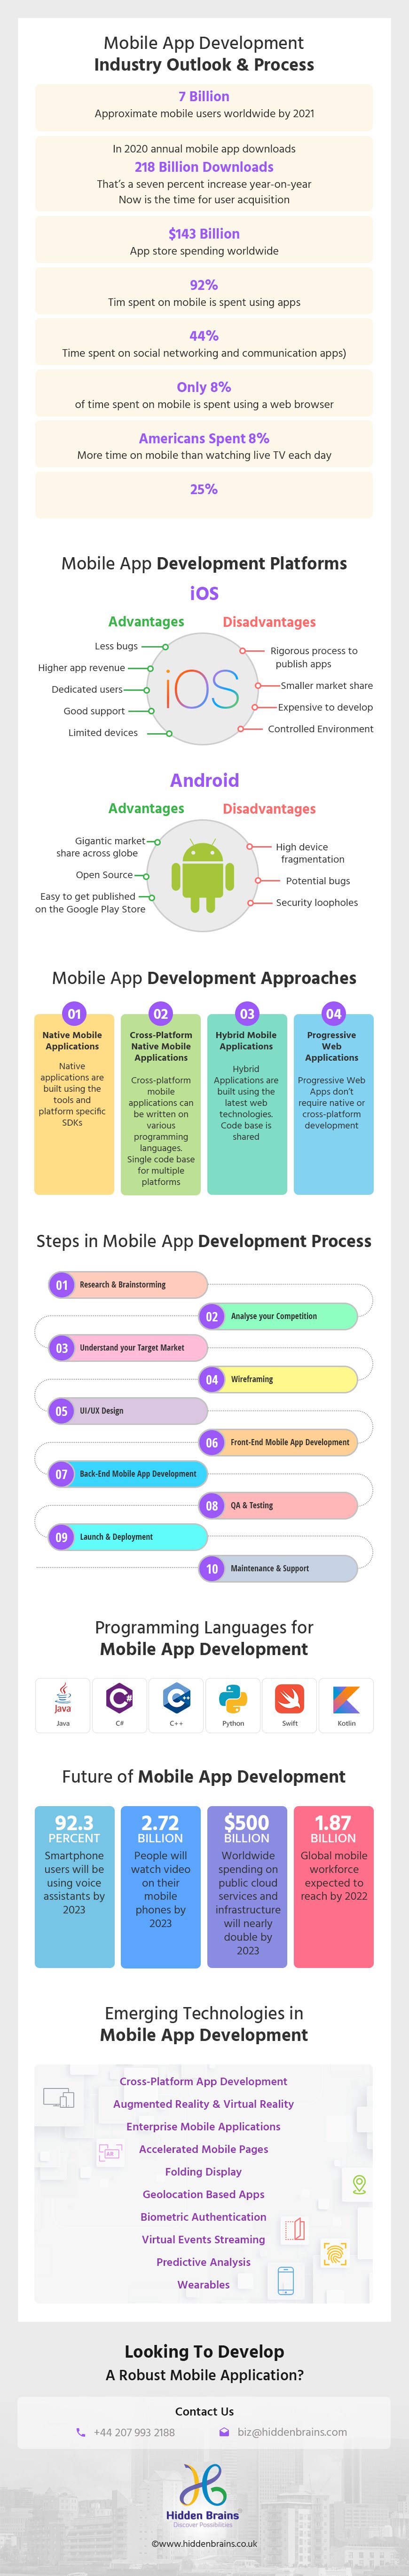 01 Mobile App Development Industry Outlook Process